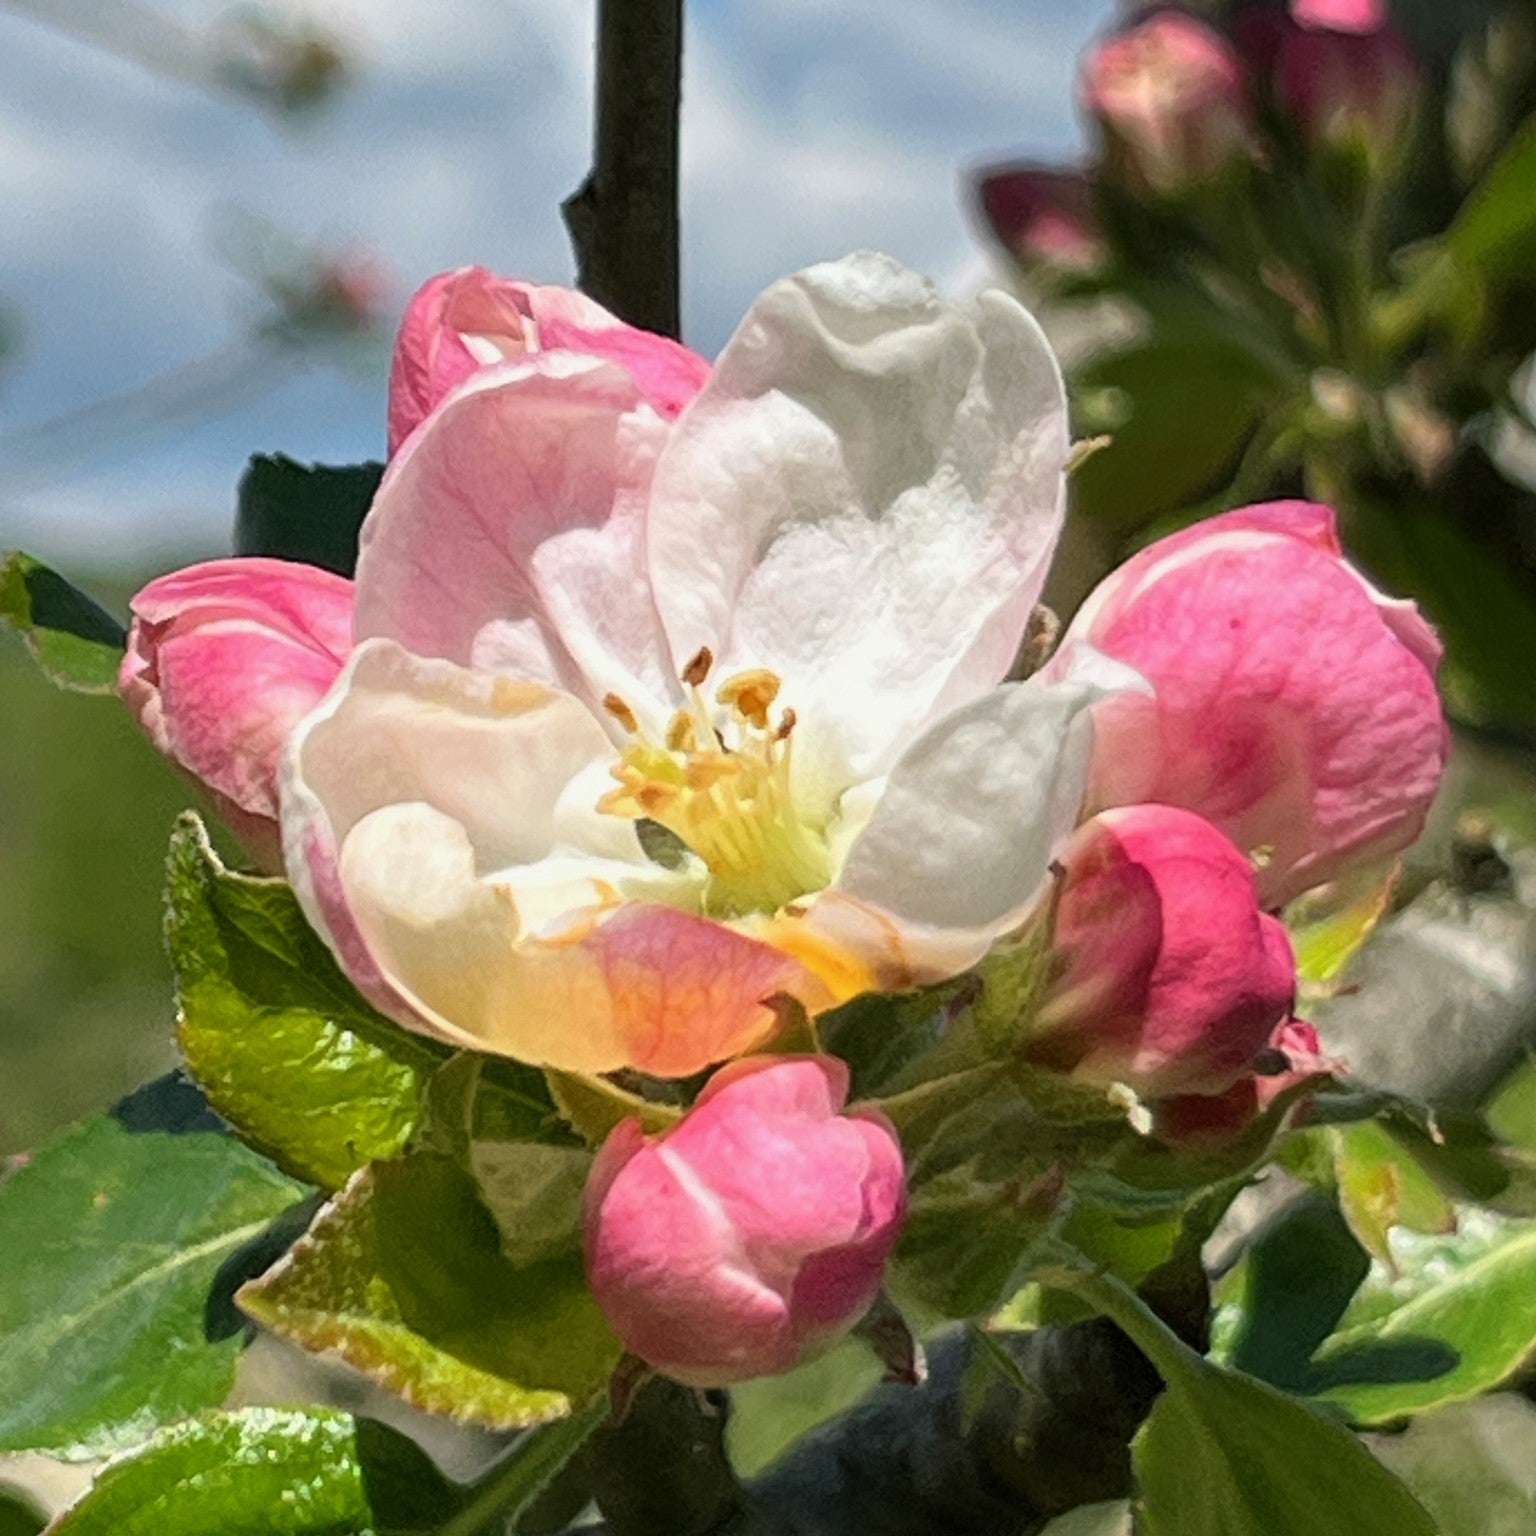 Royal Jubilee apple tree blossom